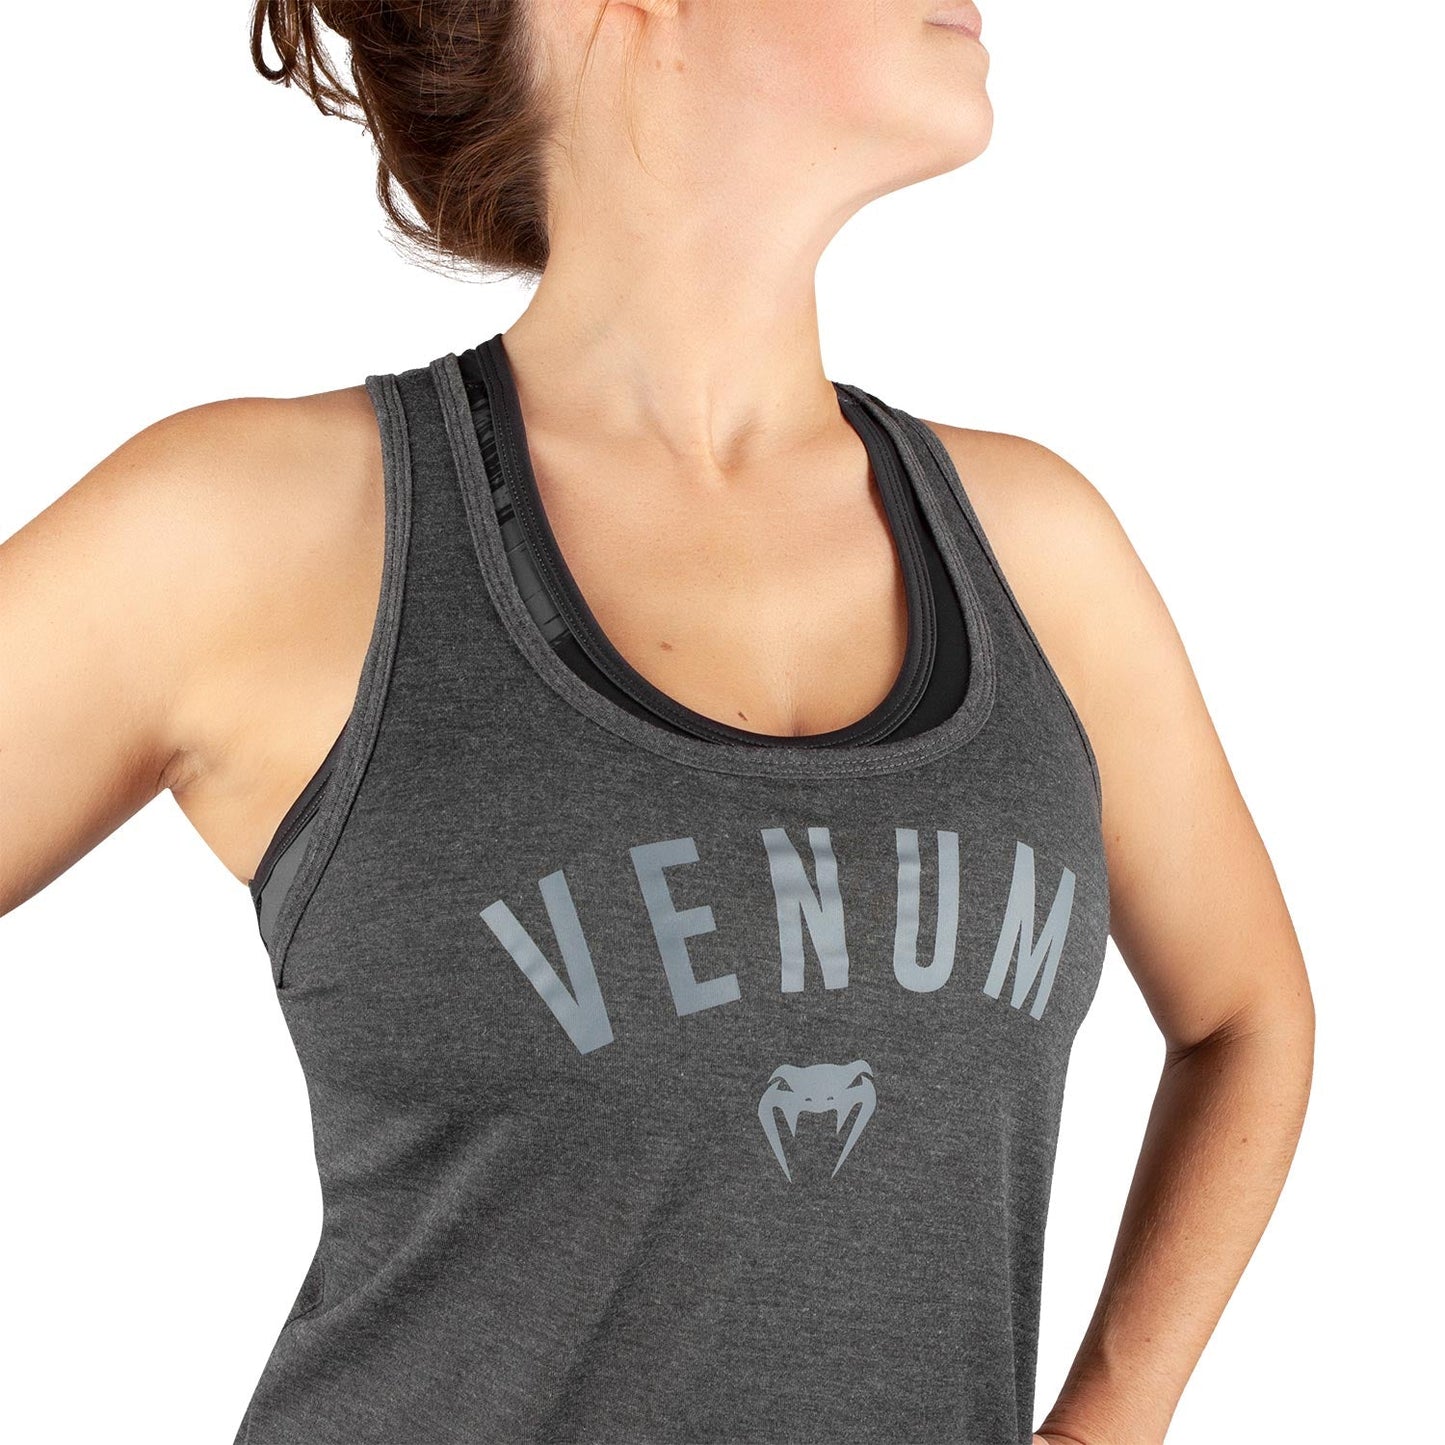 Venum Classic Tank Top - For Women - Dark heather grey